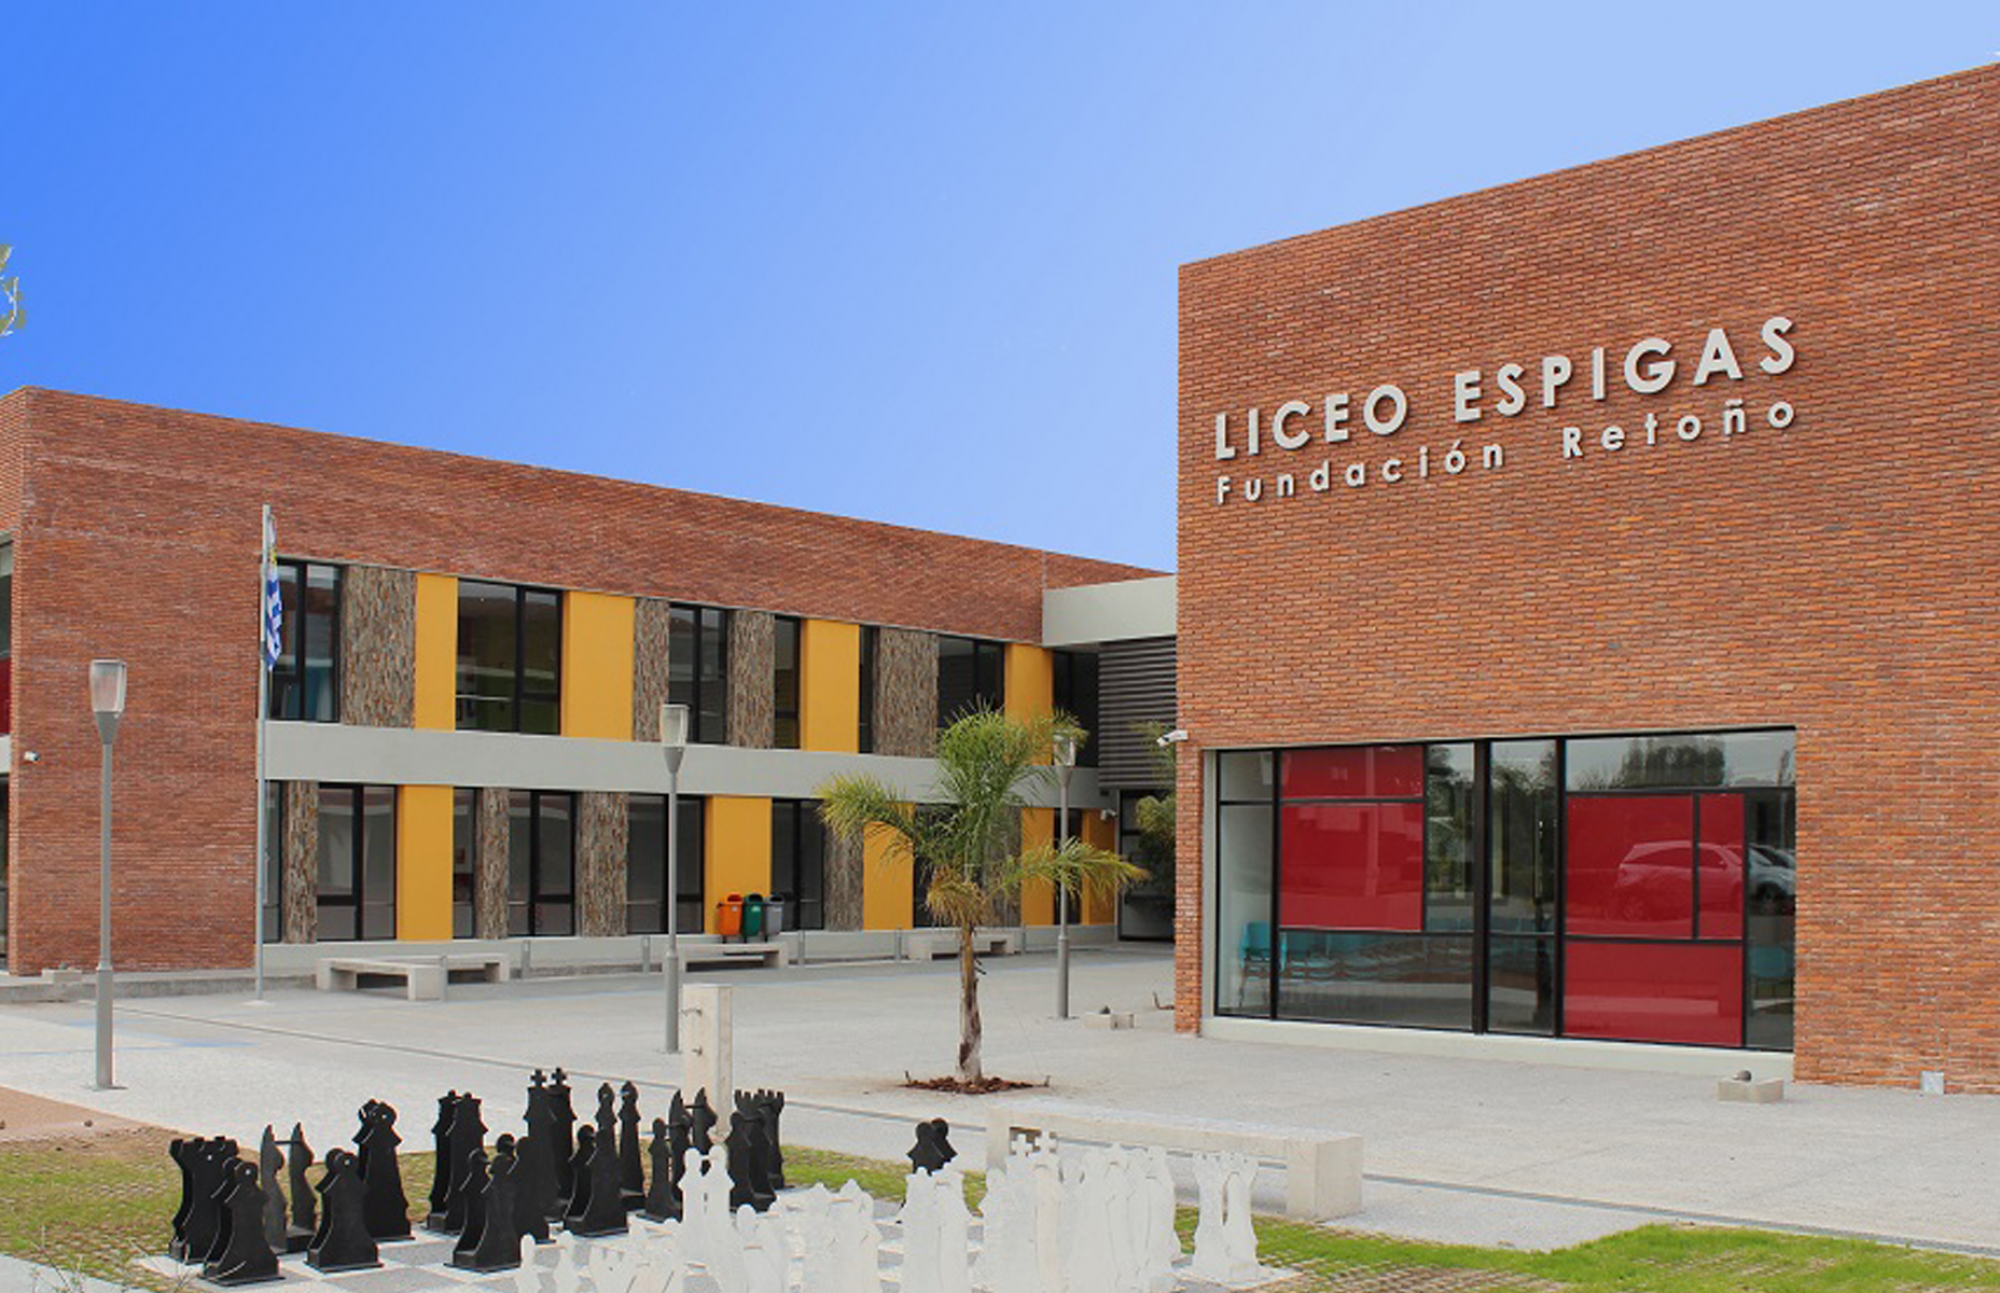 Liceo Espigas - News